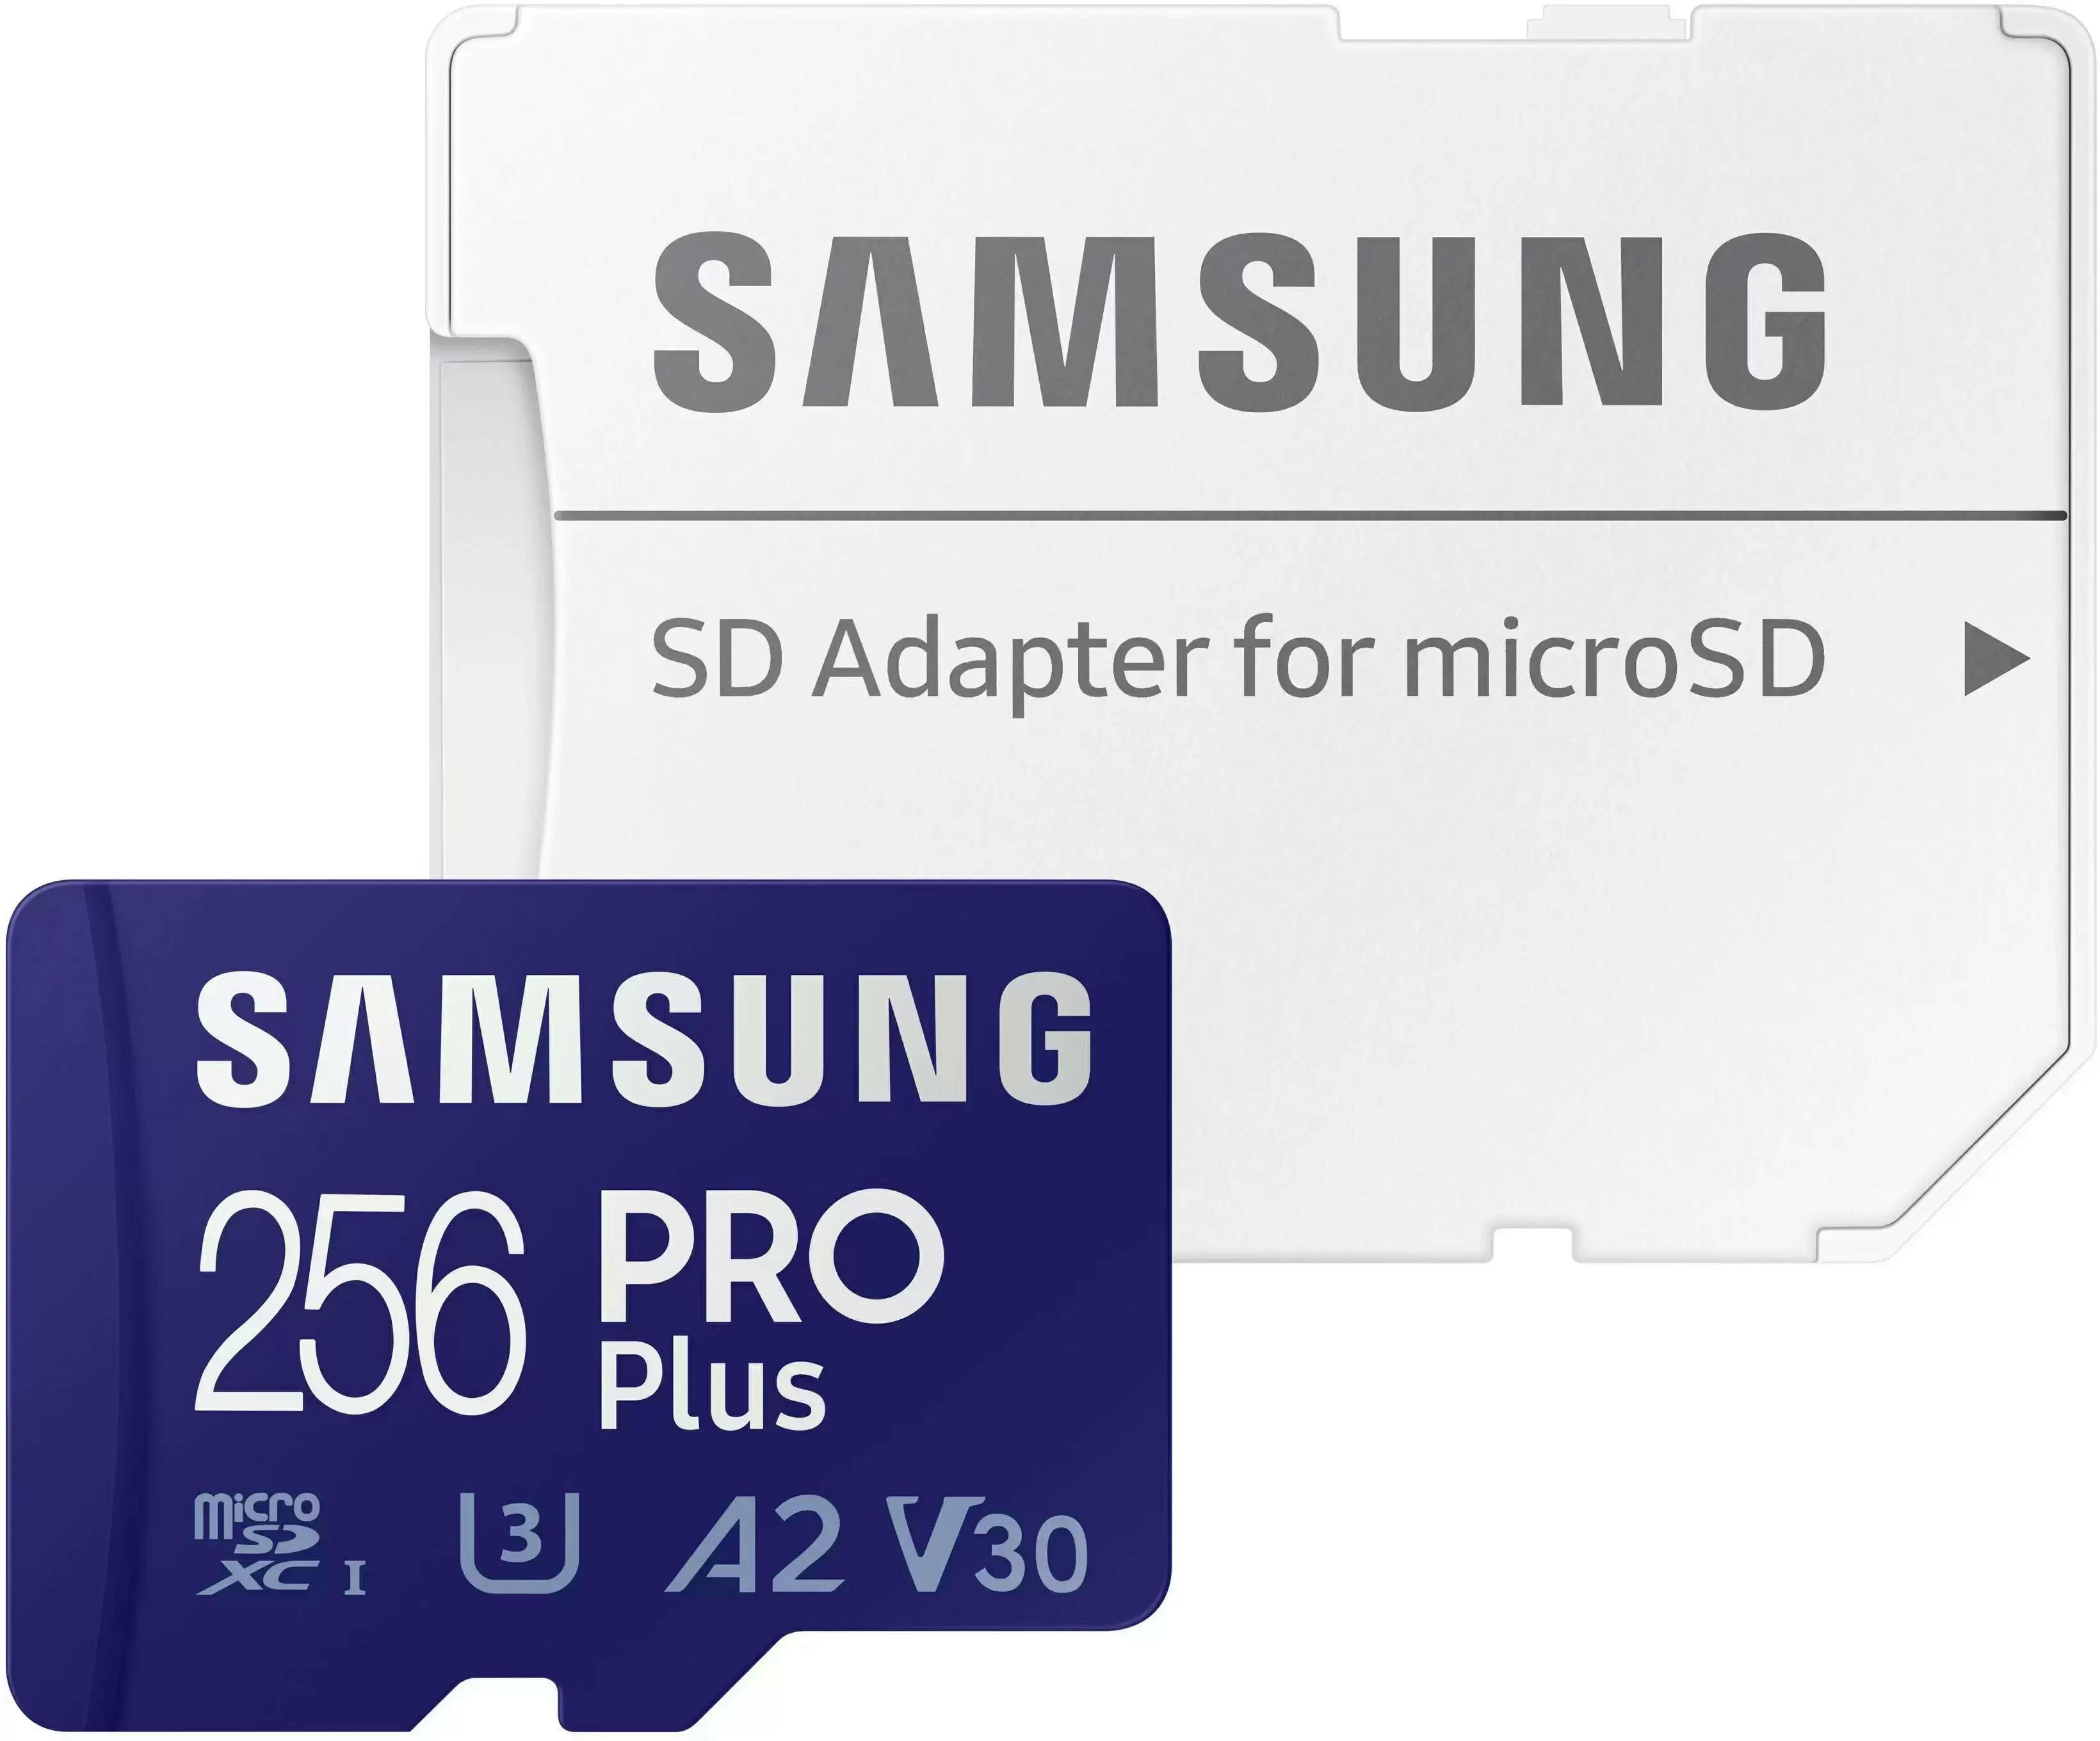 256GB Samsung PRO Plus A2 V30 microSDXC Memory Card for $22.49